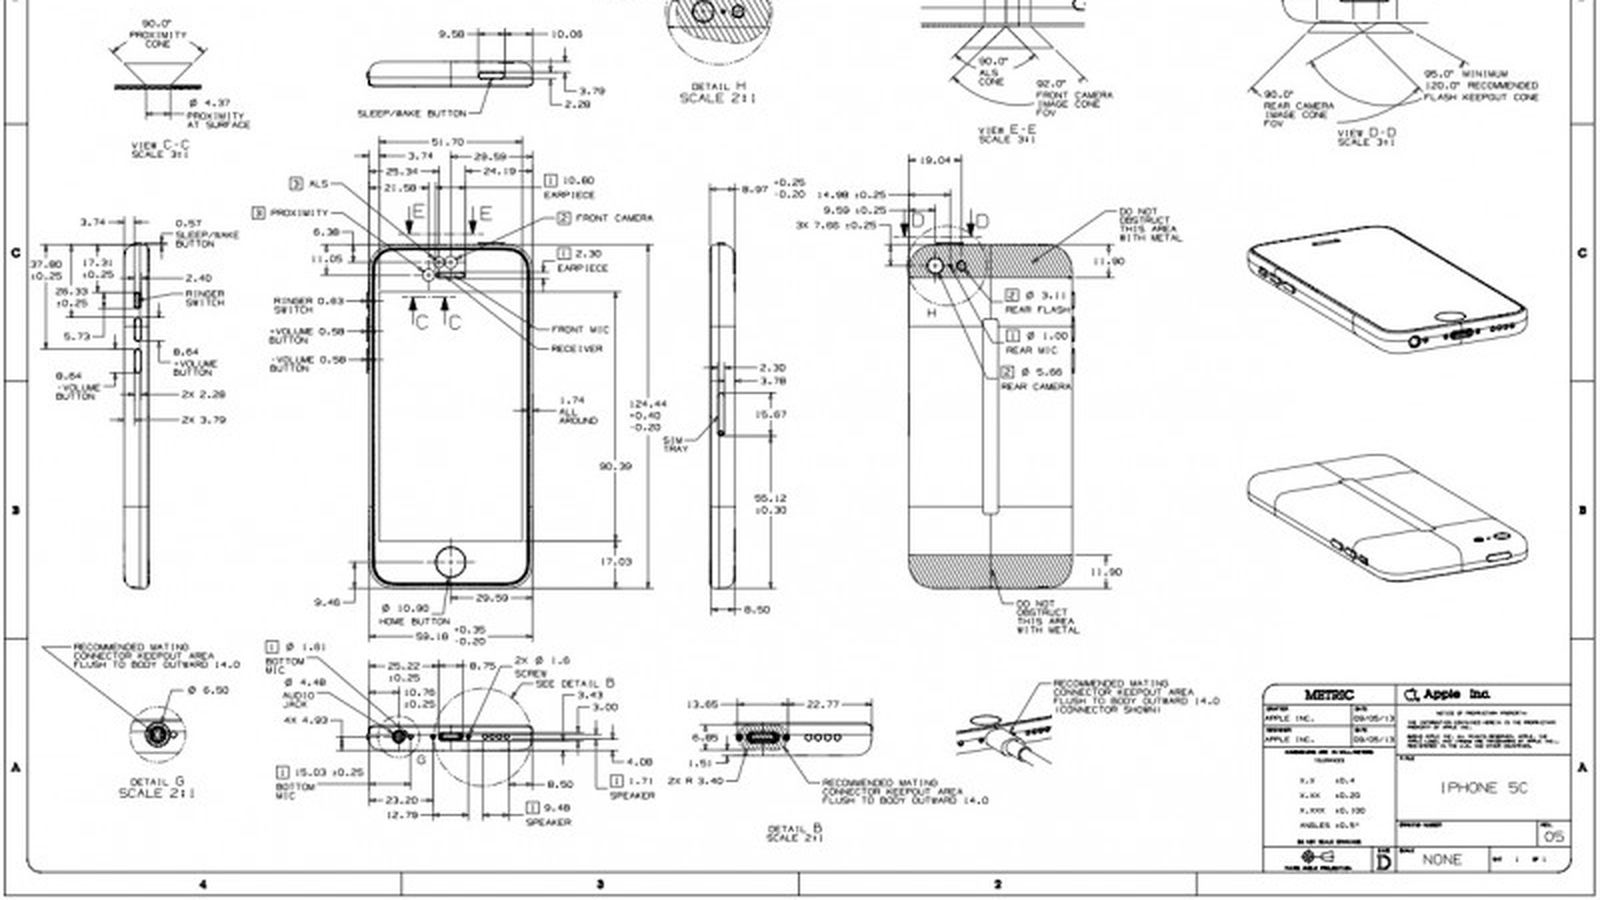 Apple iPhone 5C (6th Gen) Dimensions & Drawings